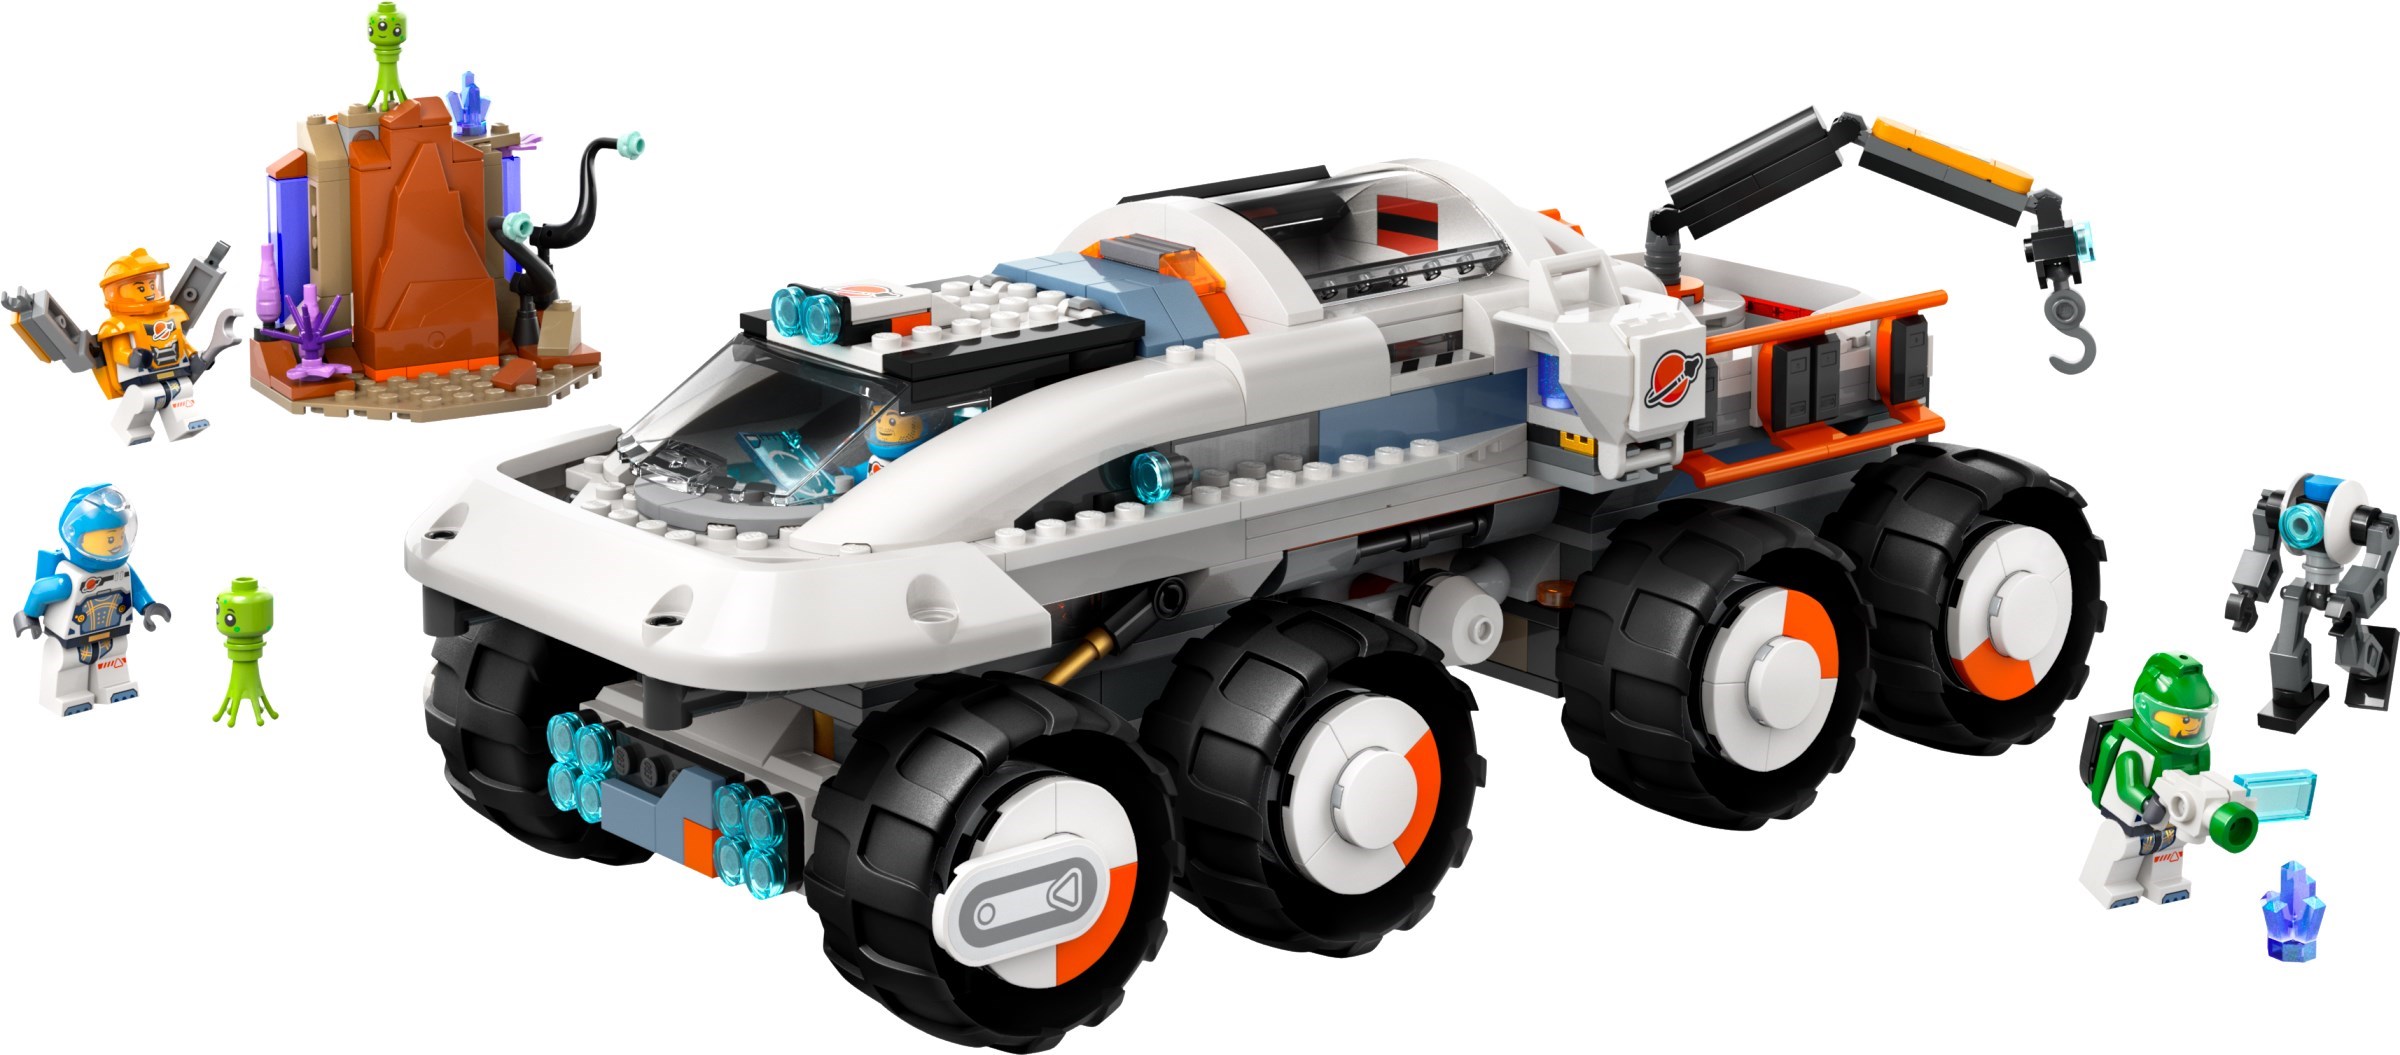 LEGO City Space Brickset